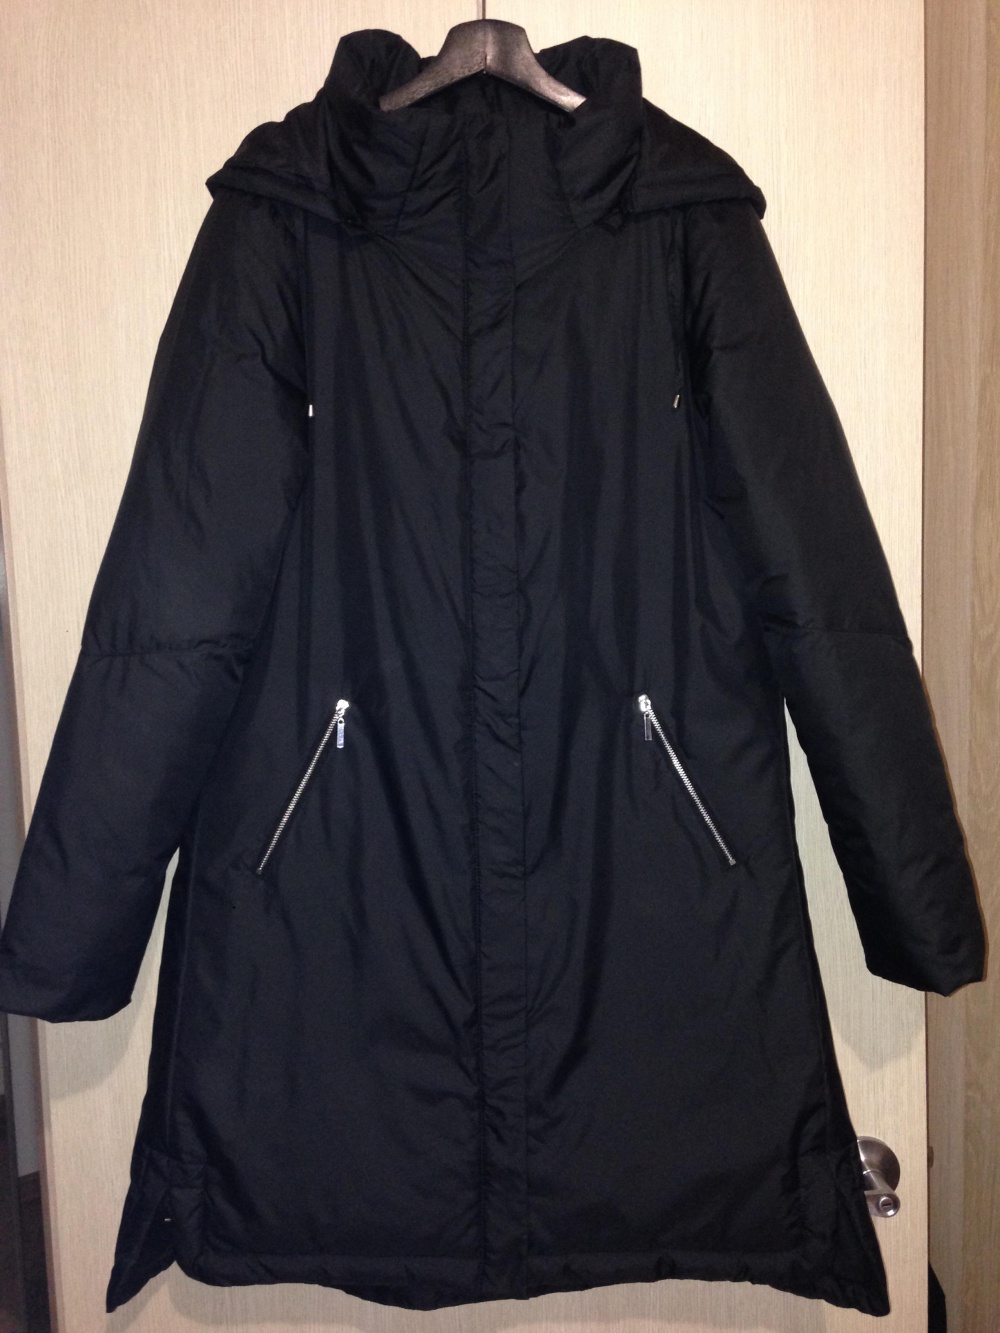 Утеплённое пальто " Medicine ", 46-48 размер.